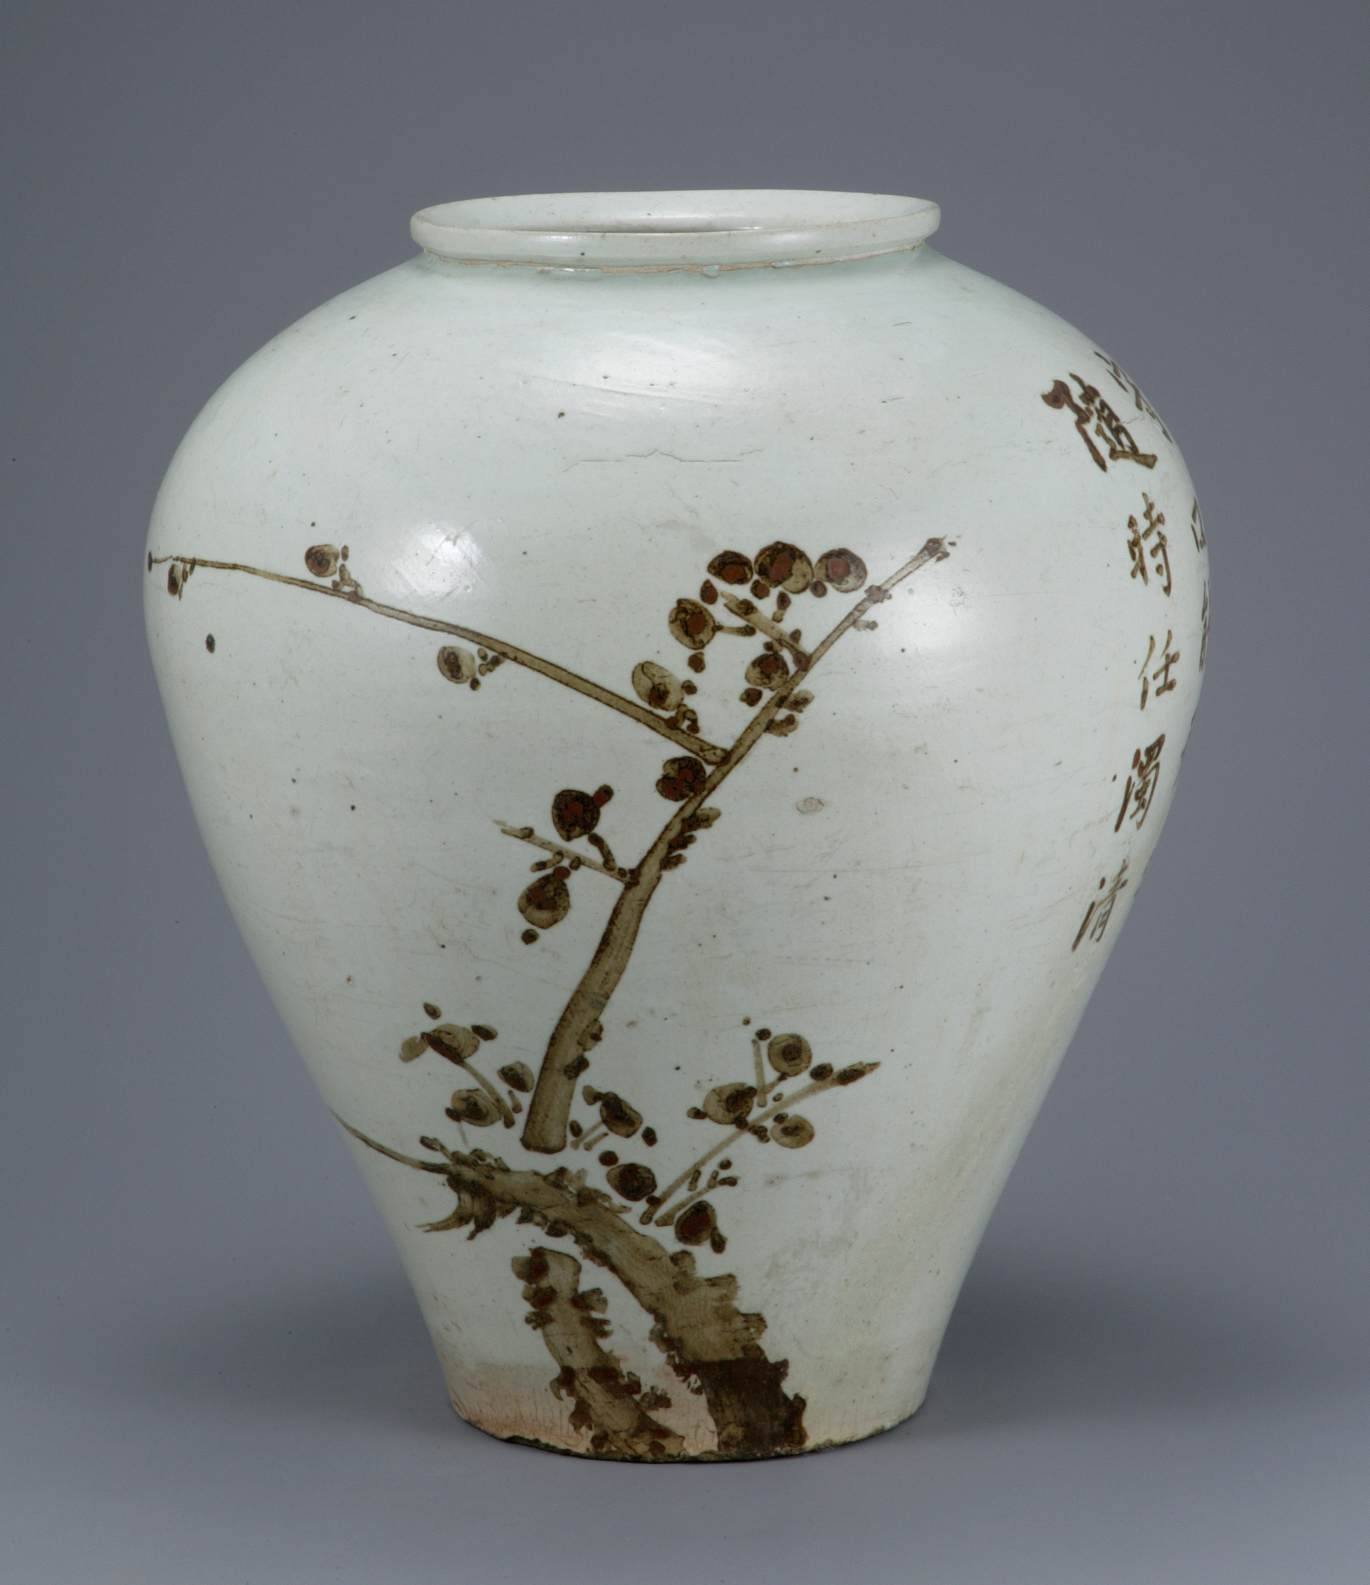  Jar with Plum, Bamboo, and Poem Design in Underglaze Iron